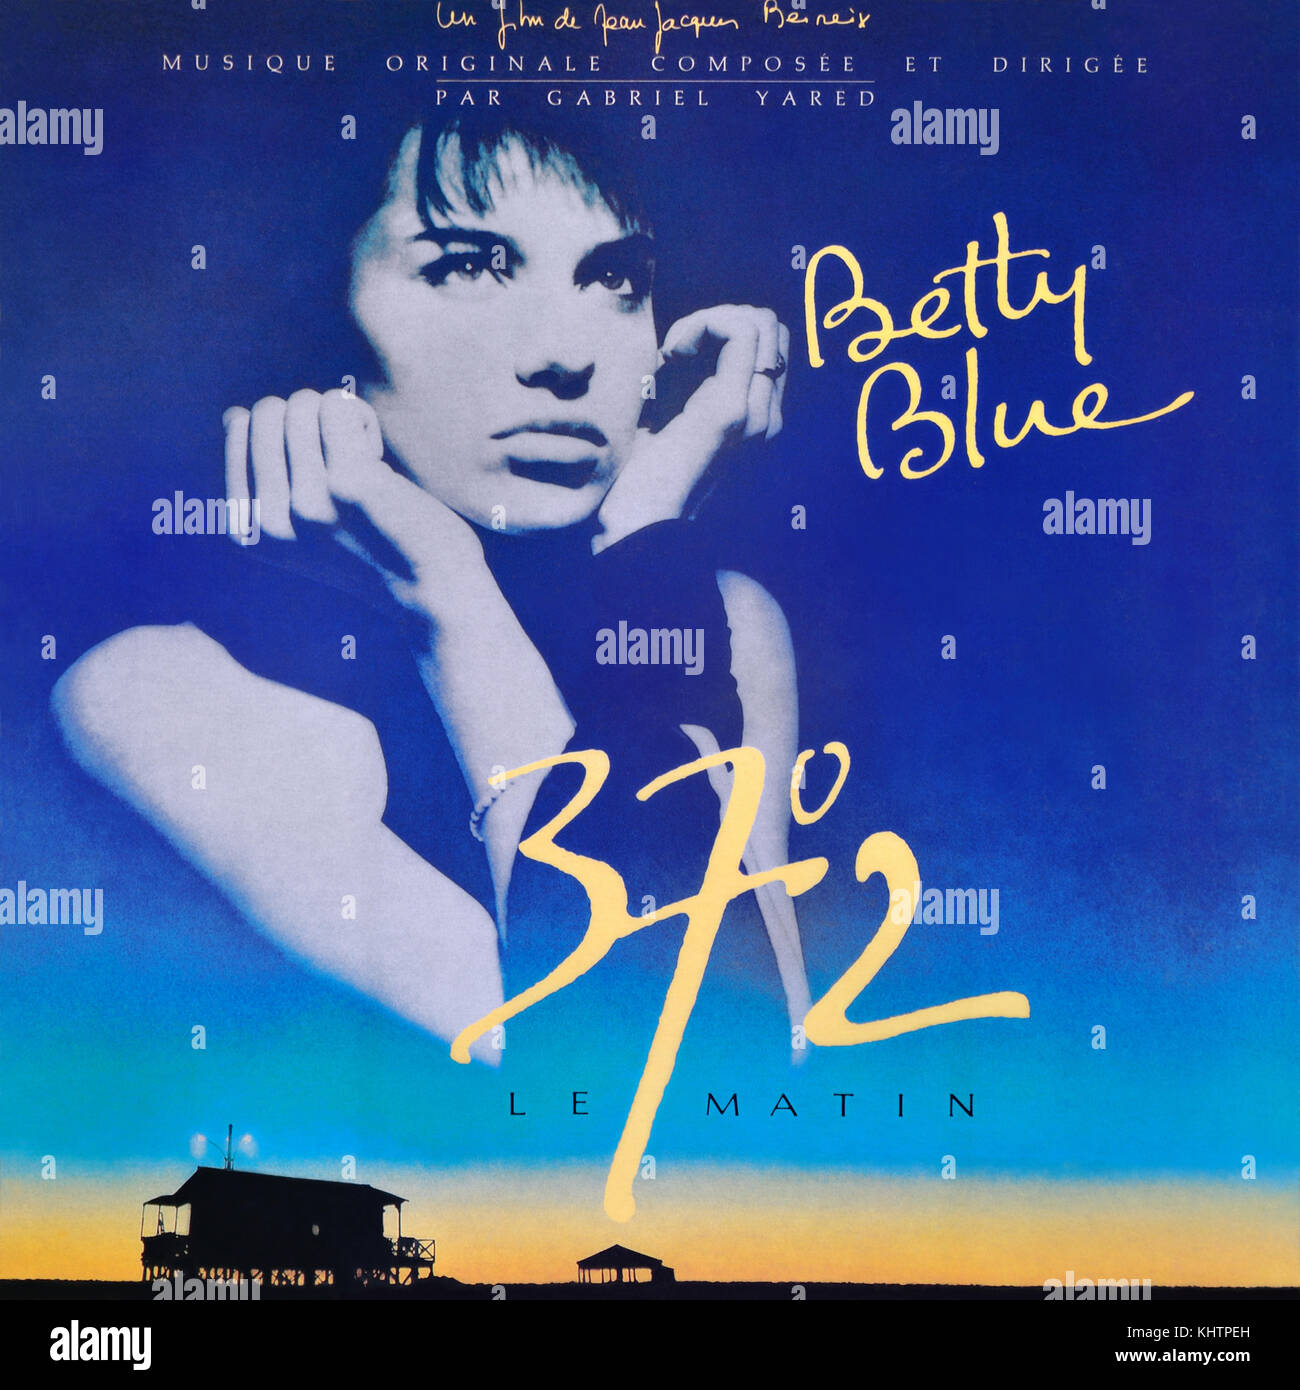 Betty Blue (Soundtrack) - original Vinyl Album Cover - 37 2 Le matin - 1986 Stockfoto